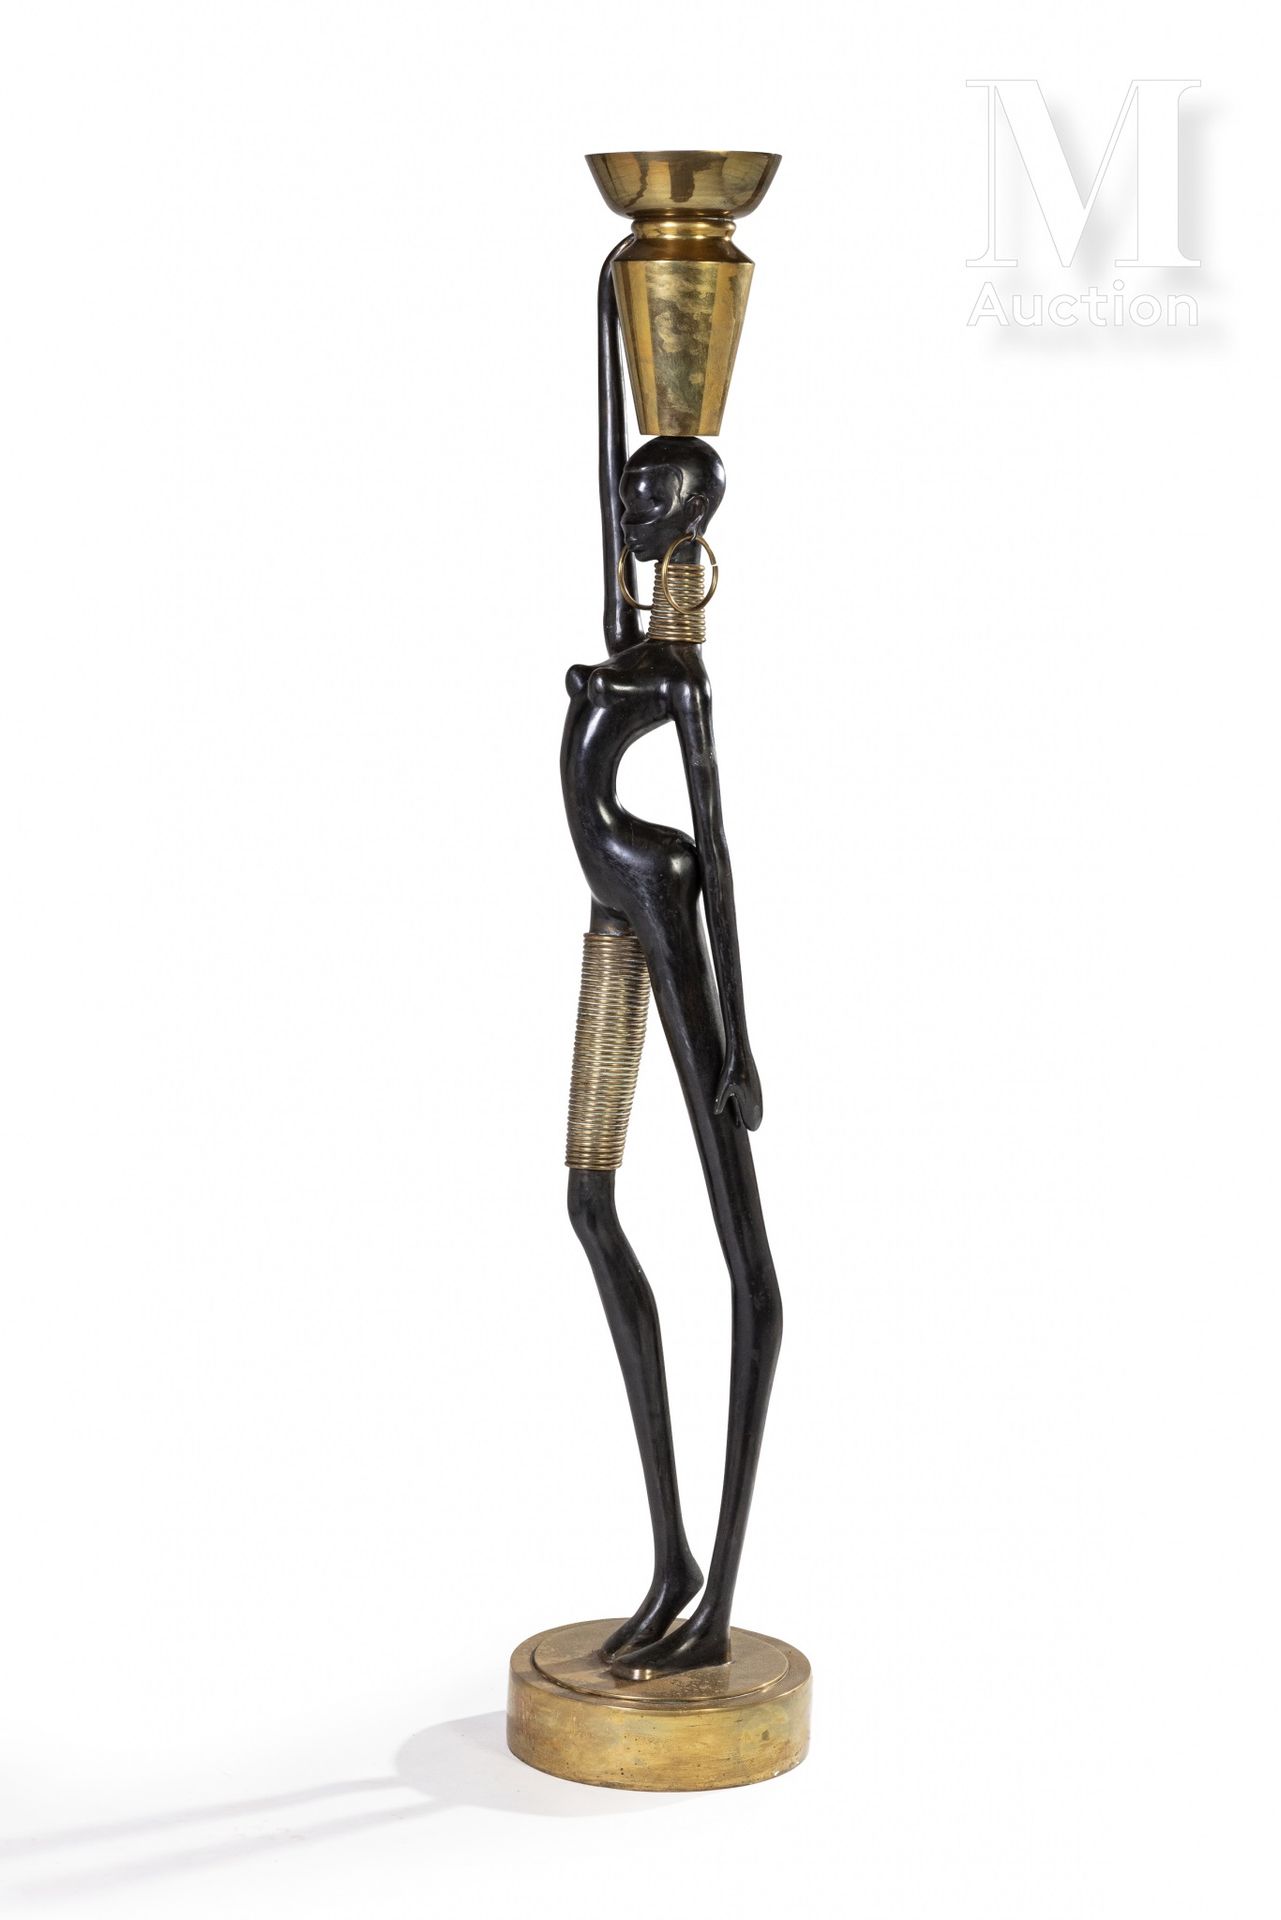 Dans le style de Karl HAGENAUER Giraffe woman

Metal sculpture with a dark and g&hellip;